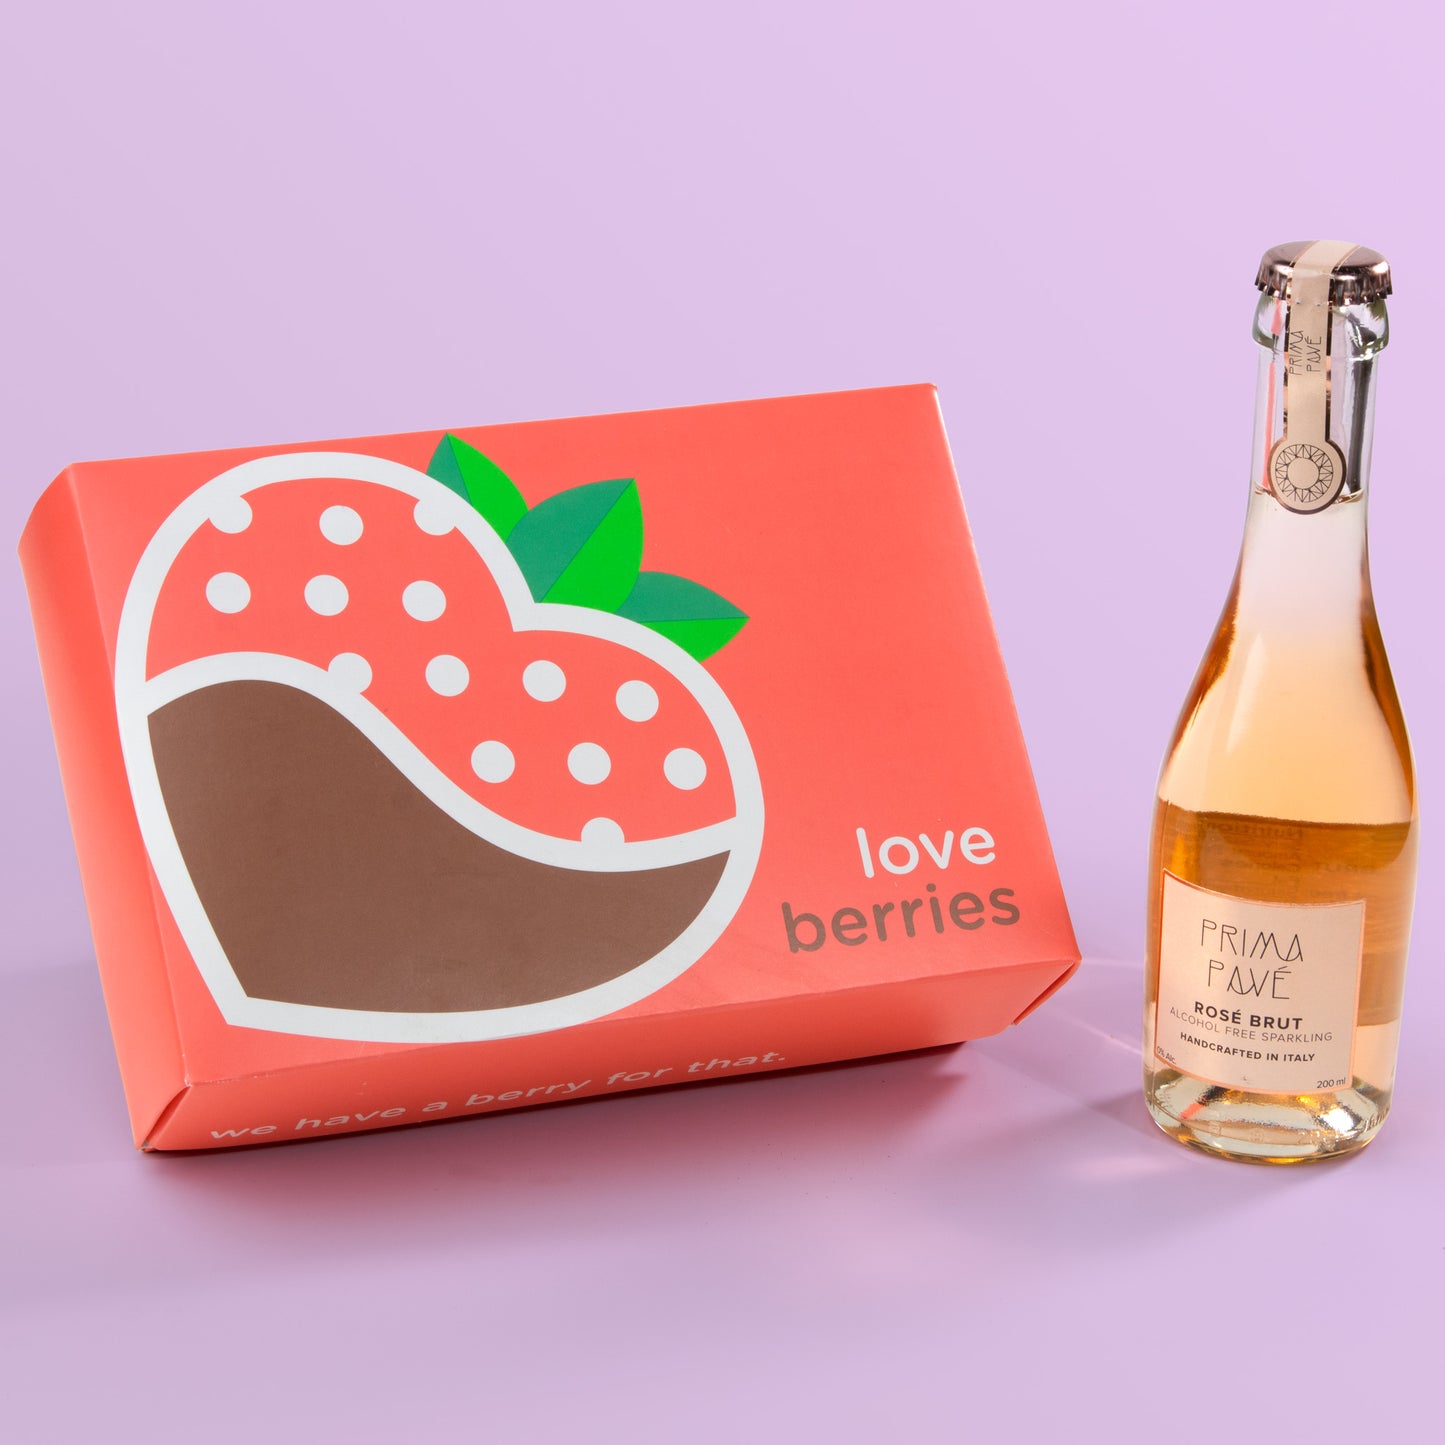 Original Love Berries with Mini Sham-pagne (Alcohol-Free)